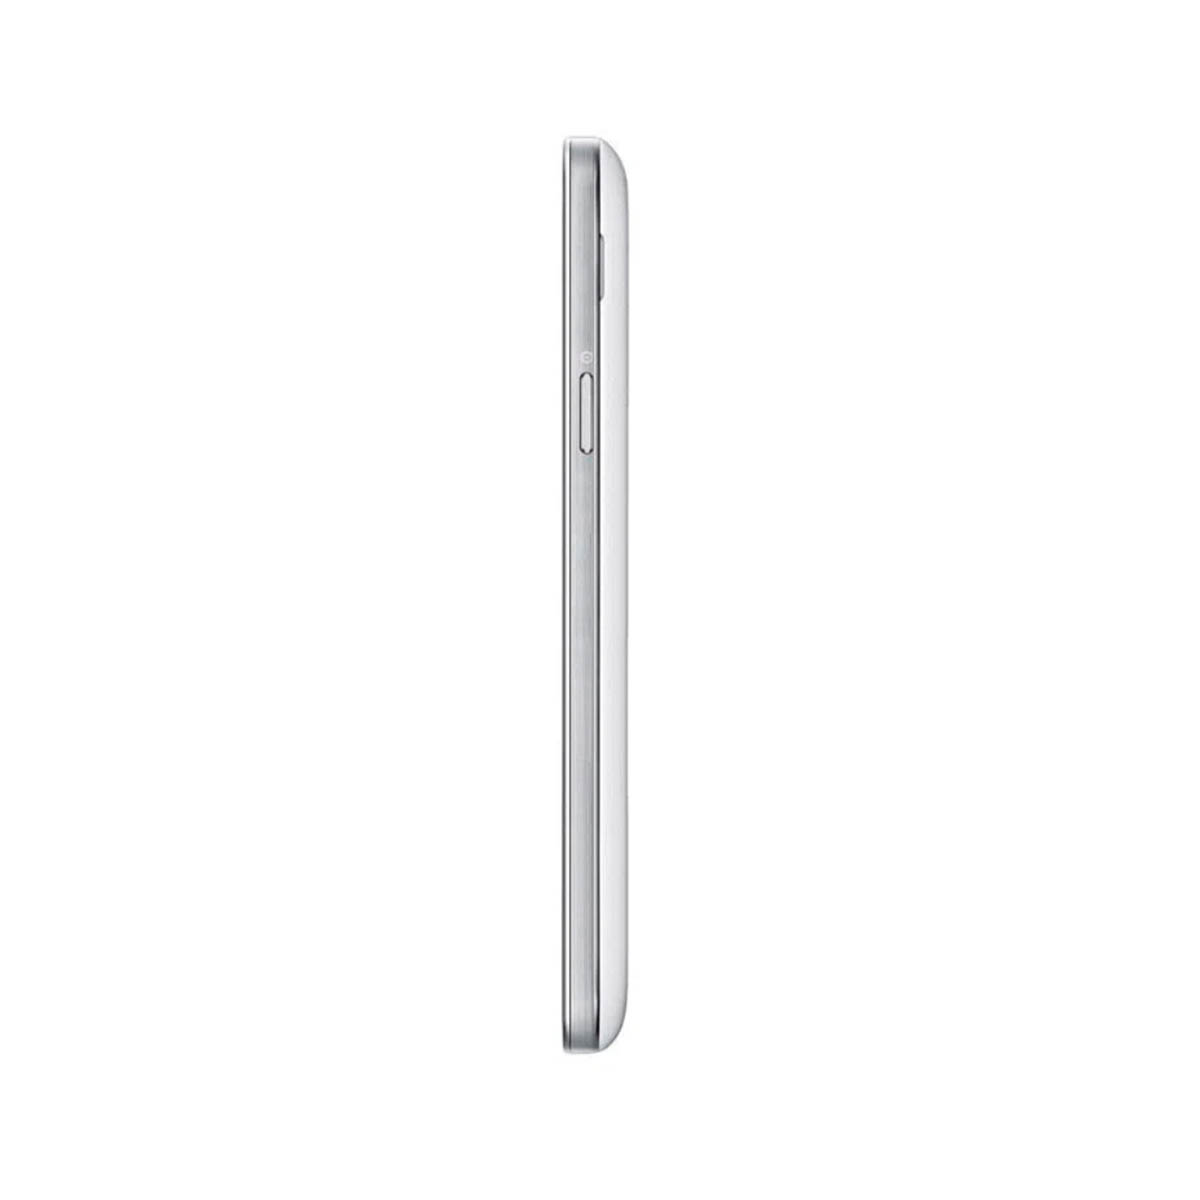 Samsung Galaxy S4 Mini I9195 8GB Tela 4,3' 8MP - Burn-in